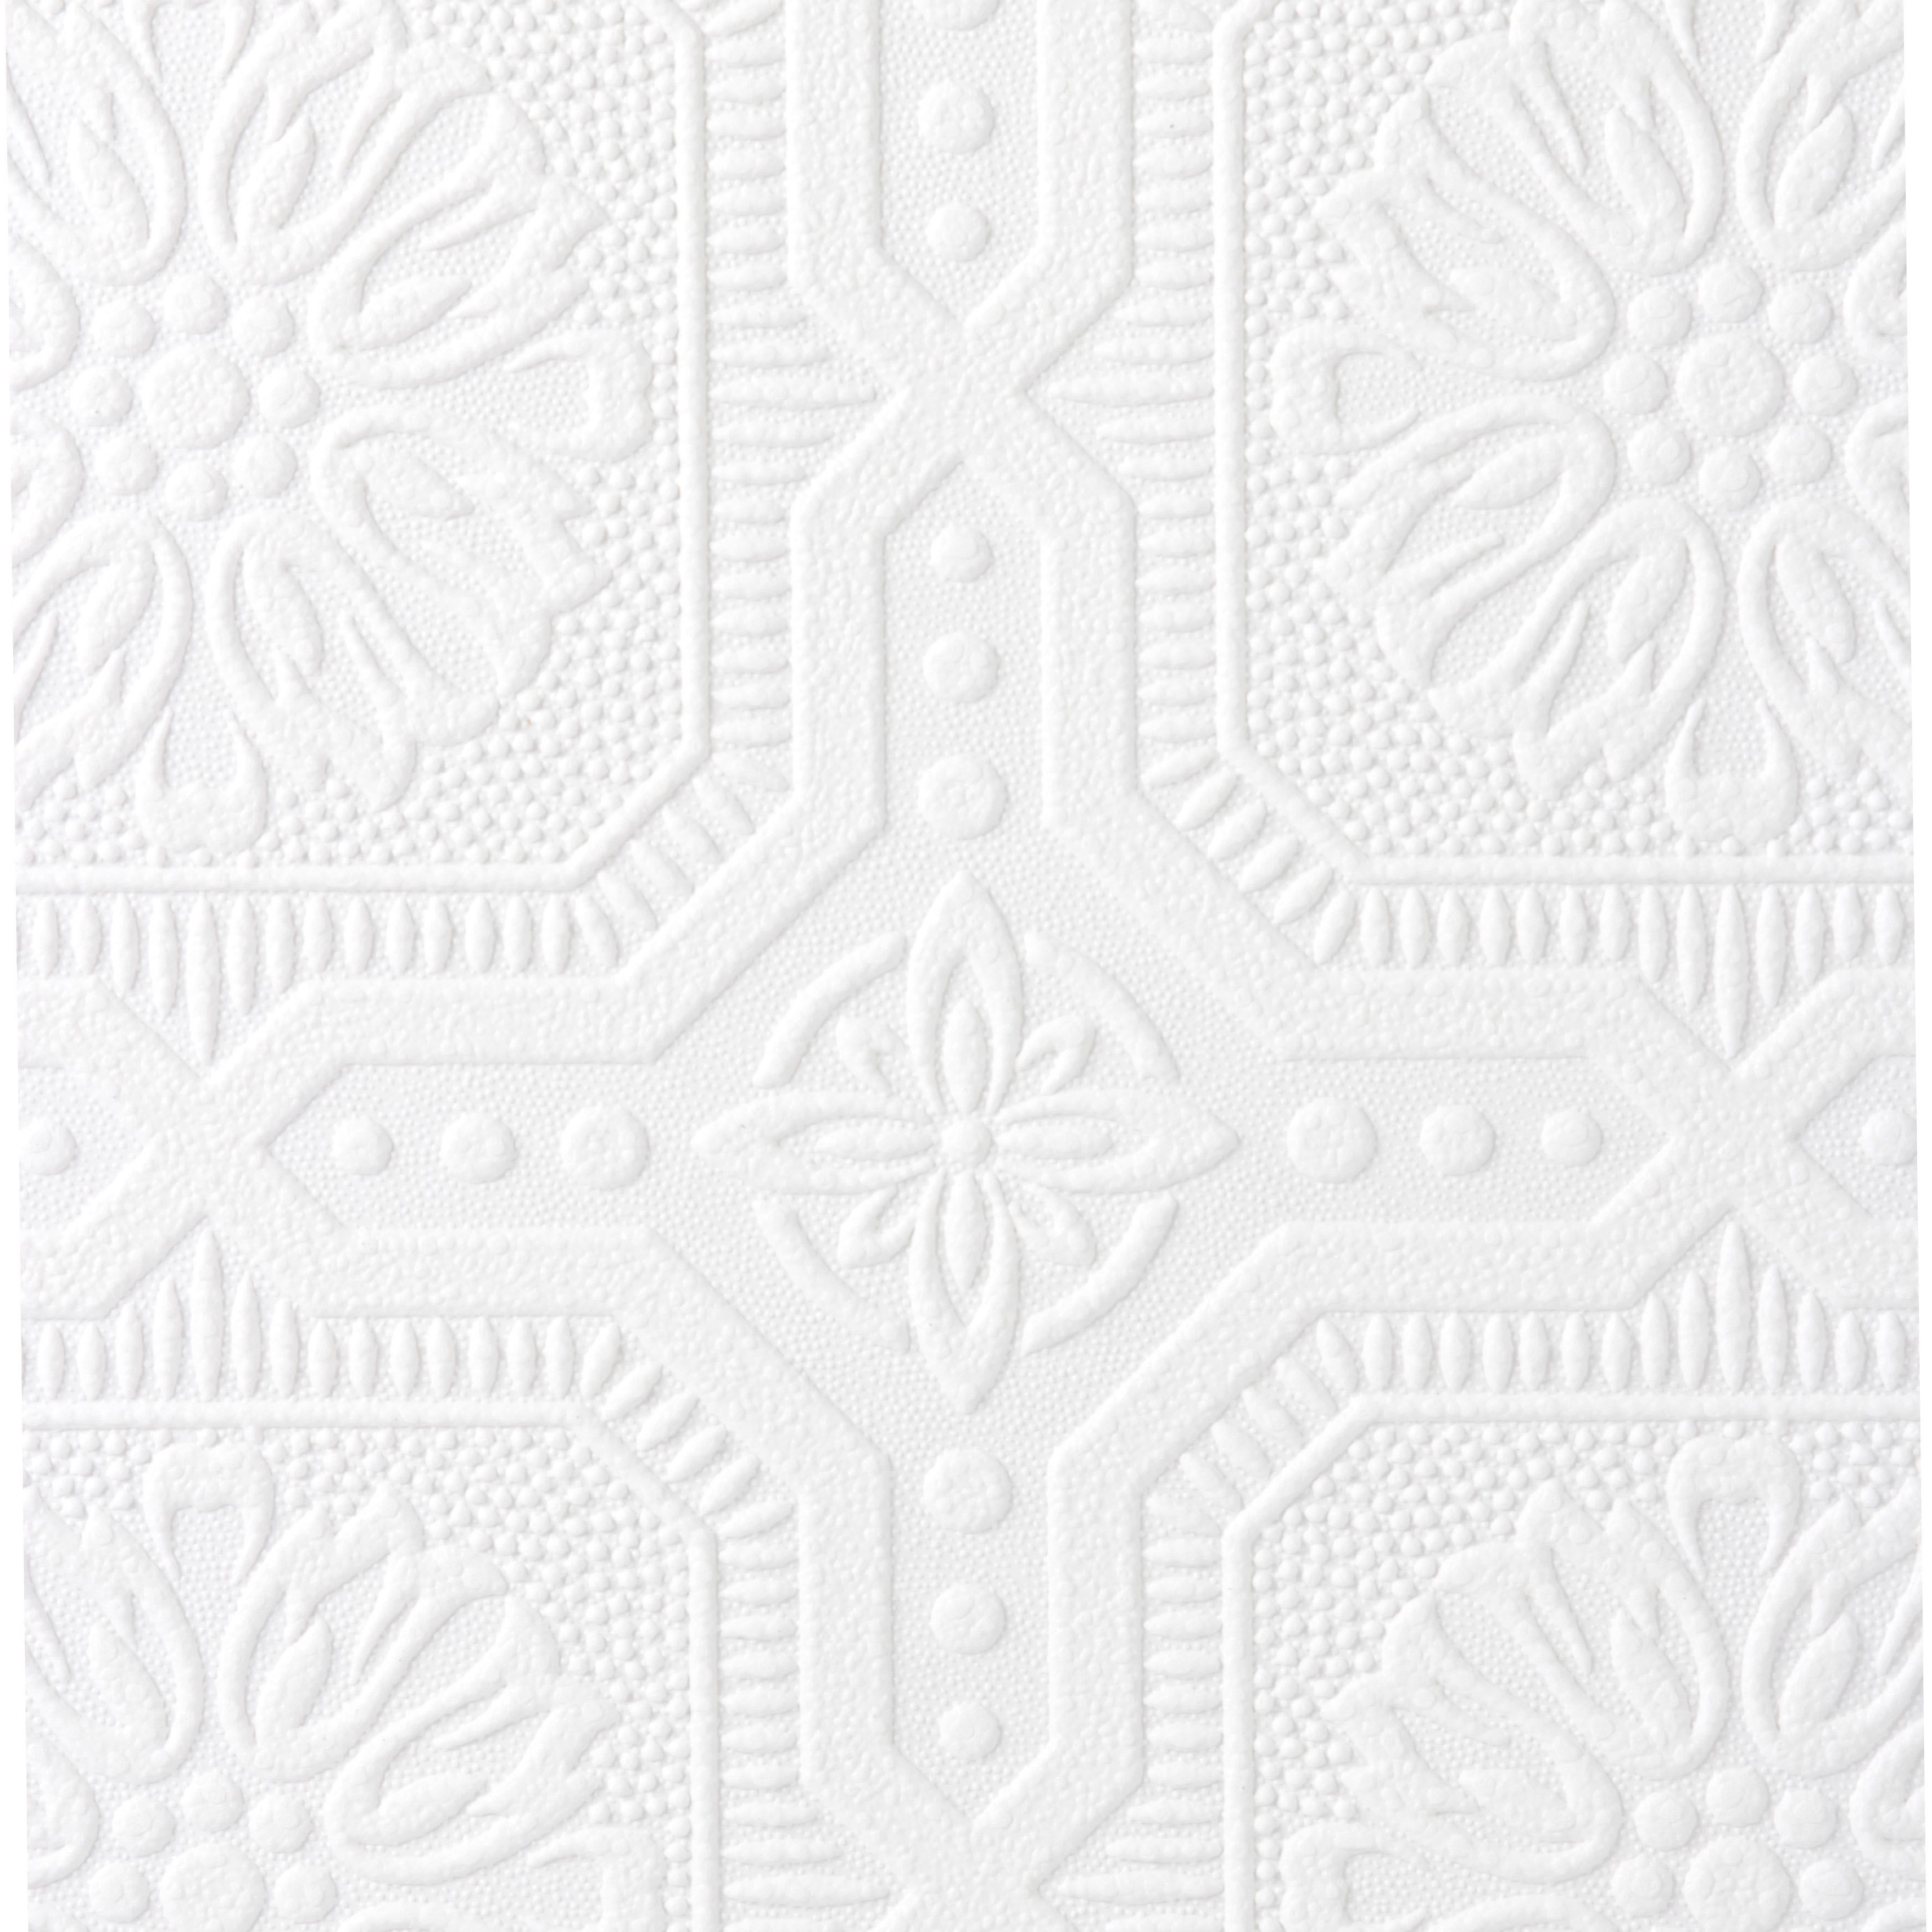 Superfresco Paintable Buckingham Textured White - 10m